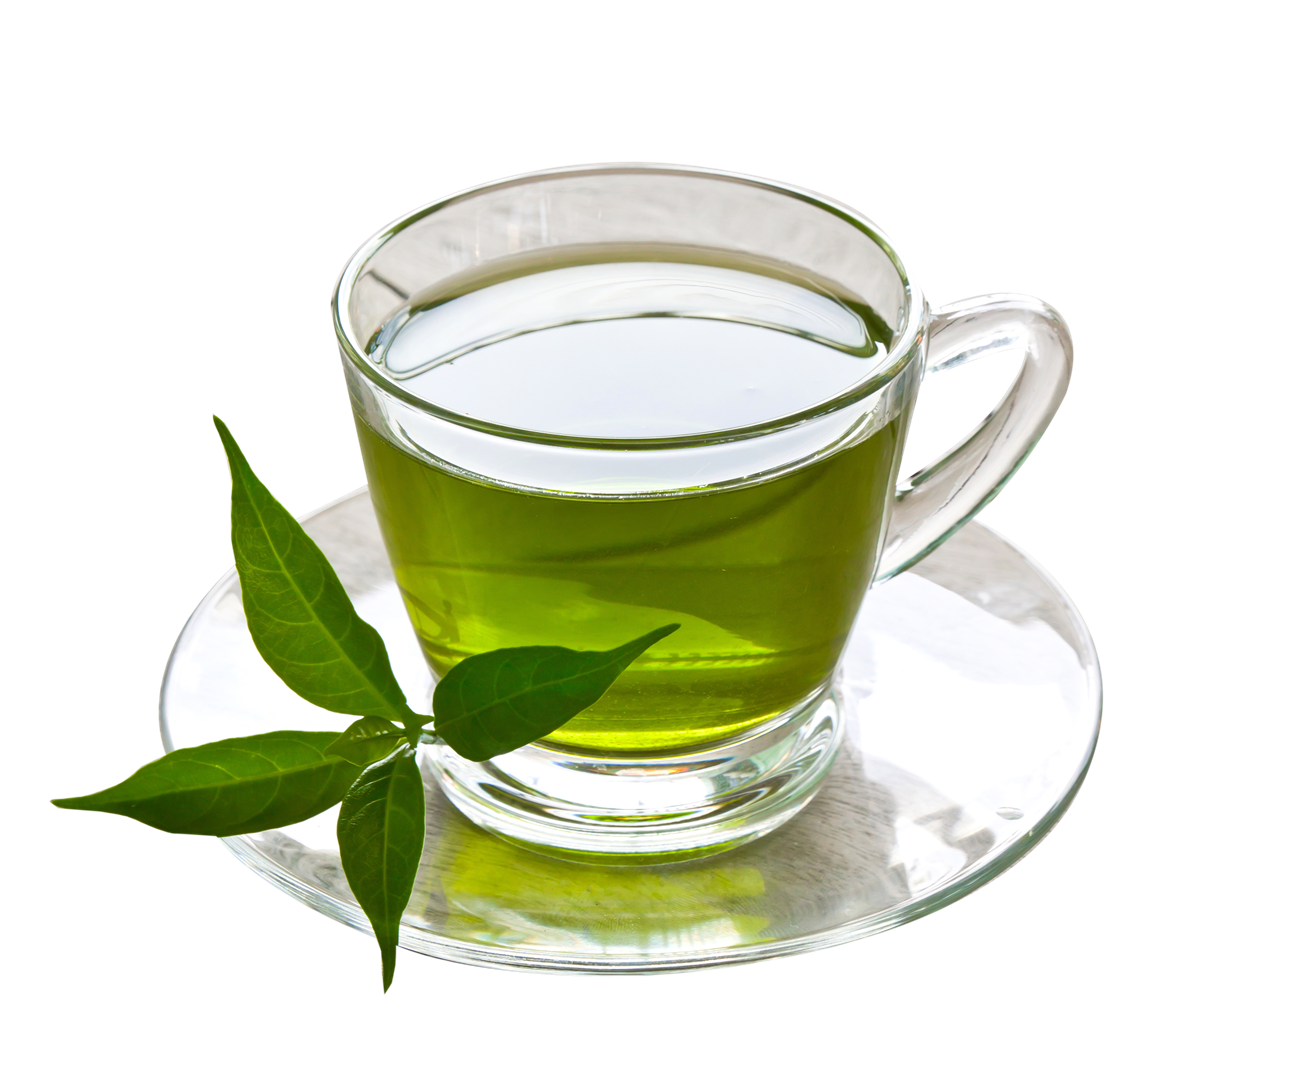 Green Tea Cup PNG HD Quality